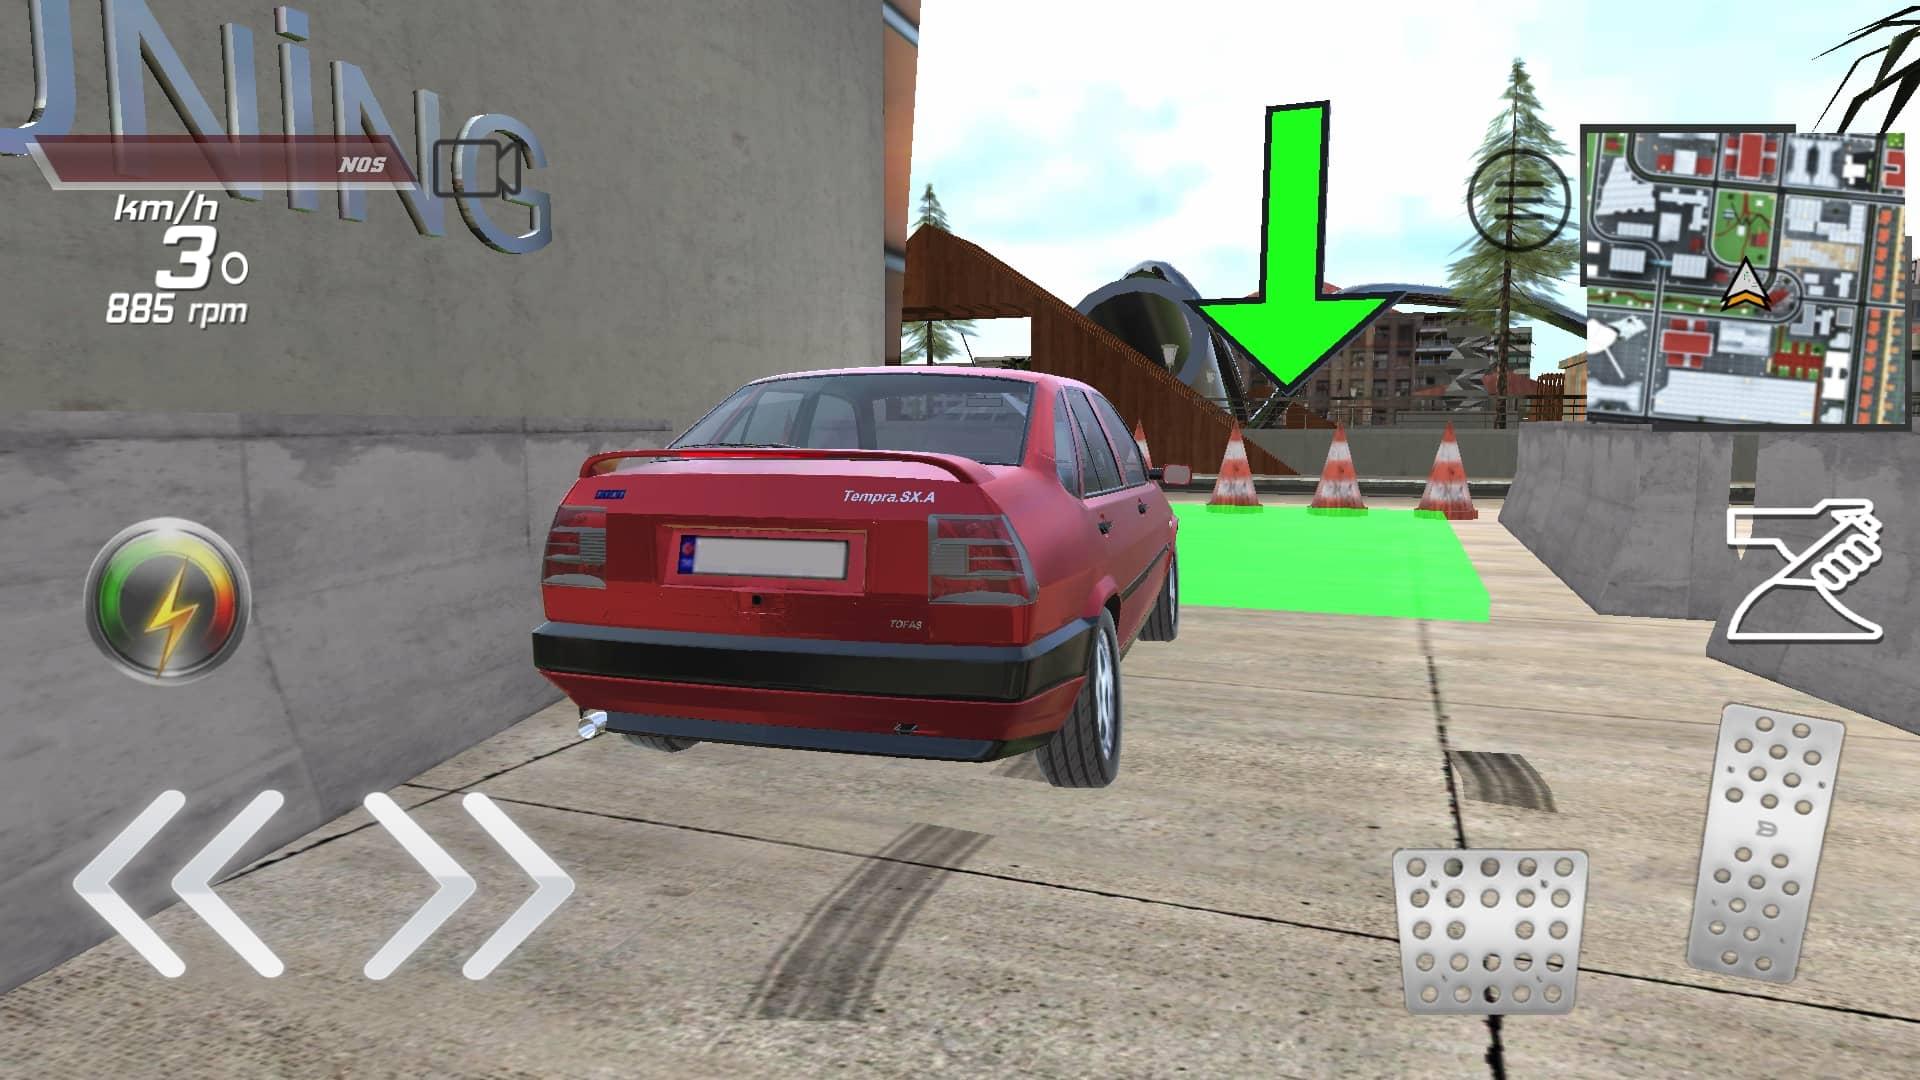 Tempra - City Simulation, Quests and Parking 1.7 Screenshot 4